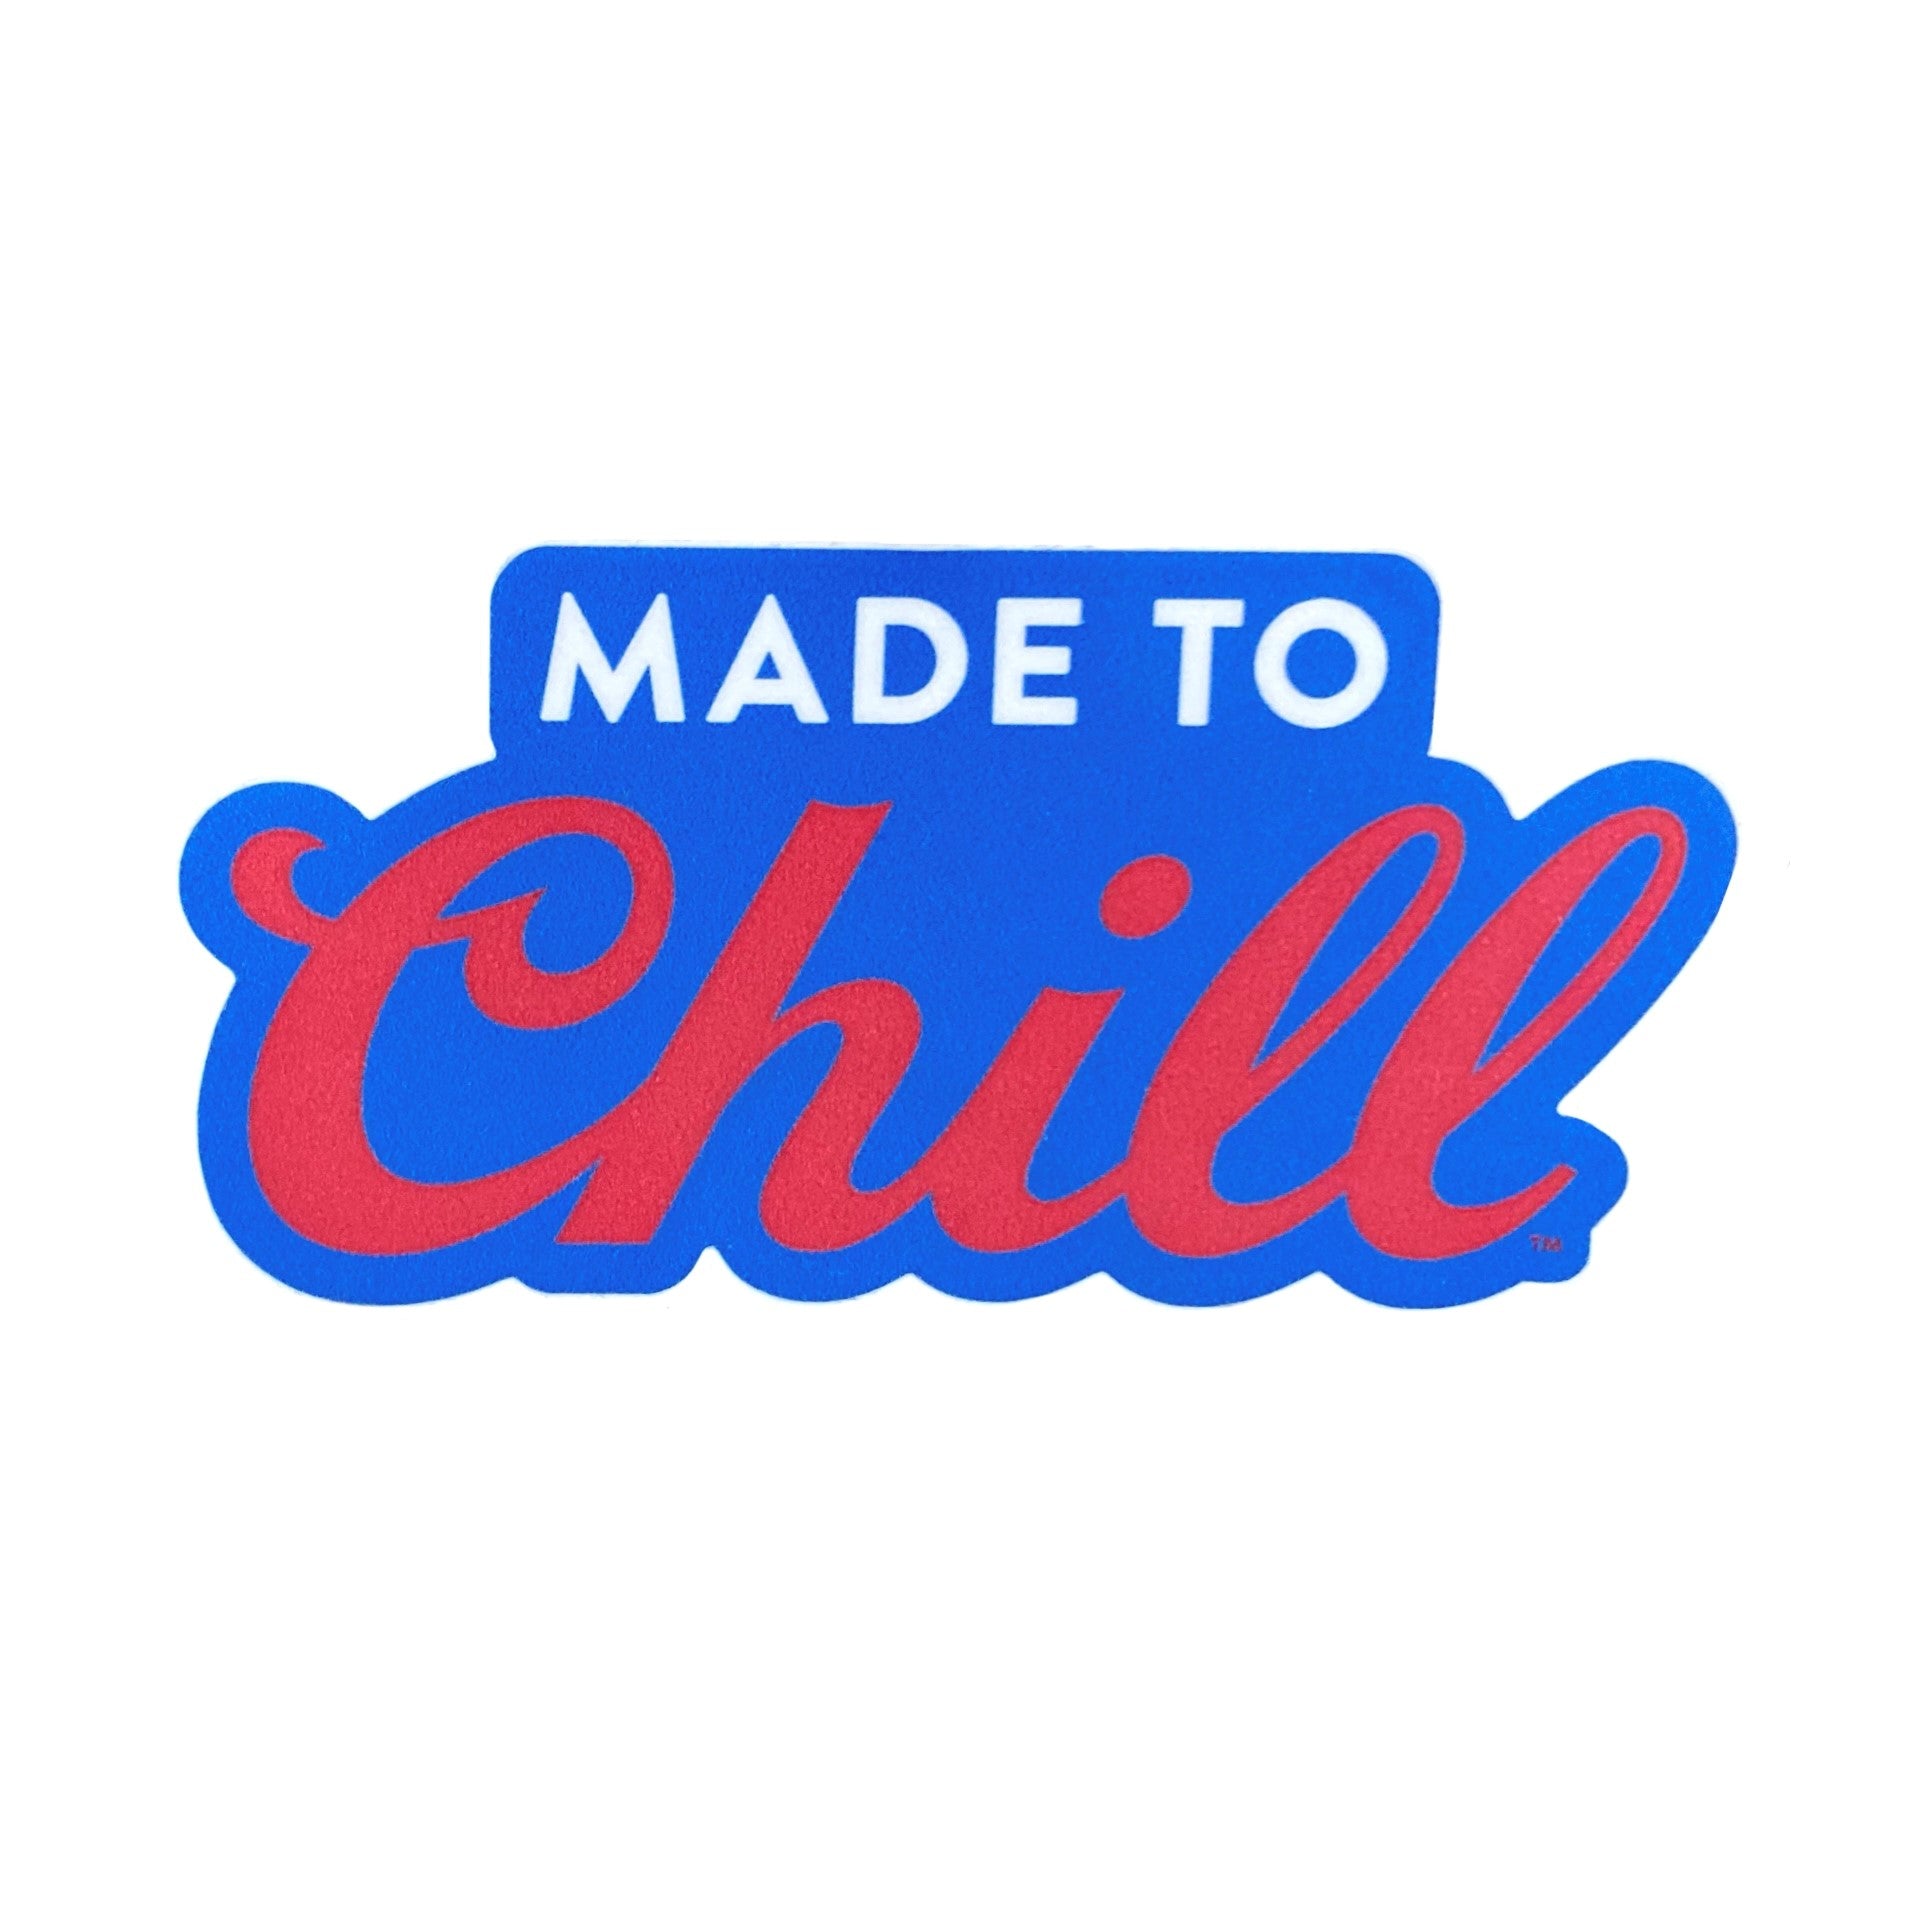 Chill Café | Coffee Shop Logo by Rihan Art on Dribbble